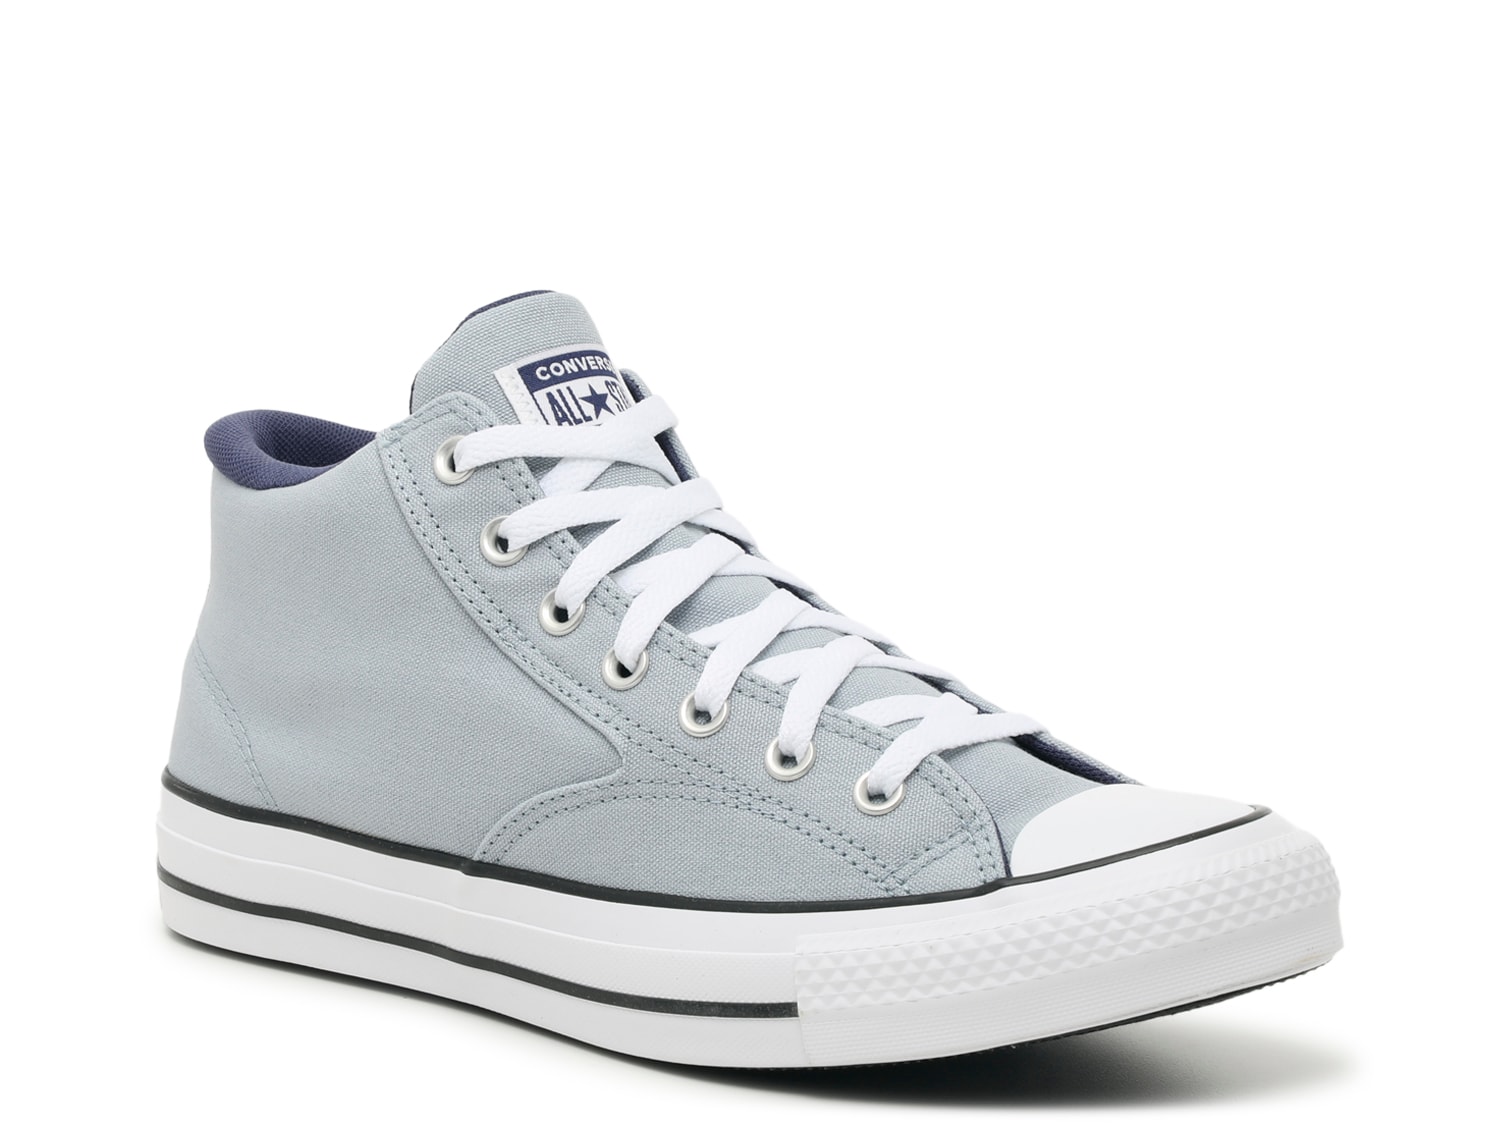 Converse Chuck Taylor All Star Malden Street Sneaker - Men's - Free Shipping |